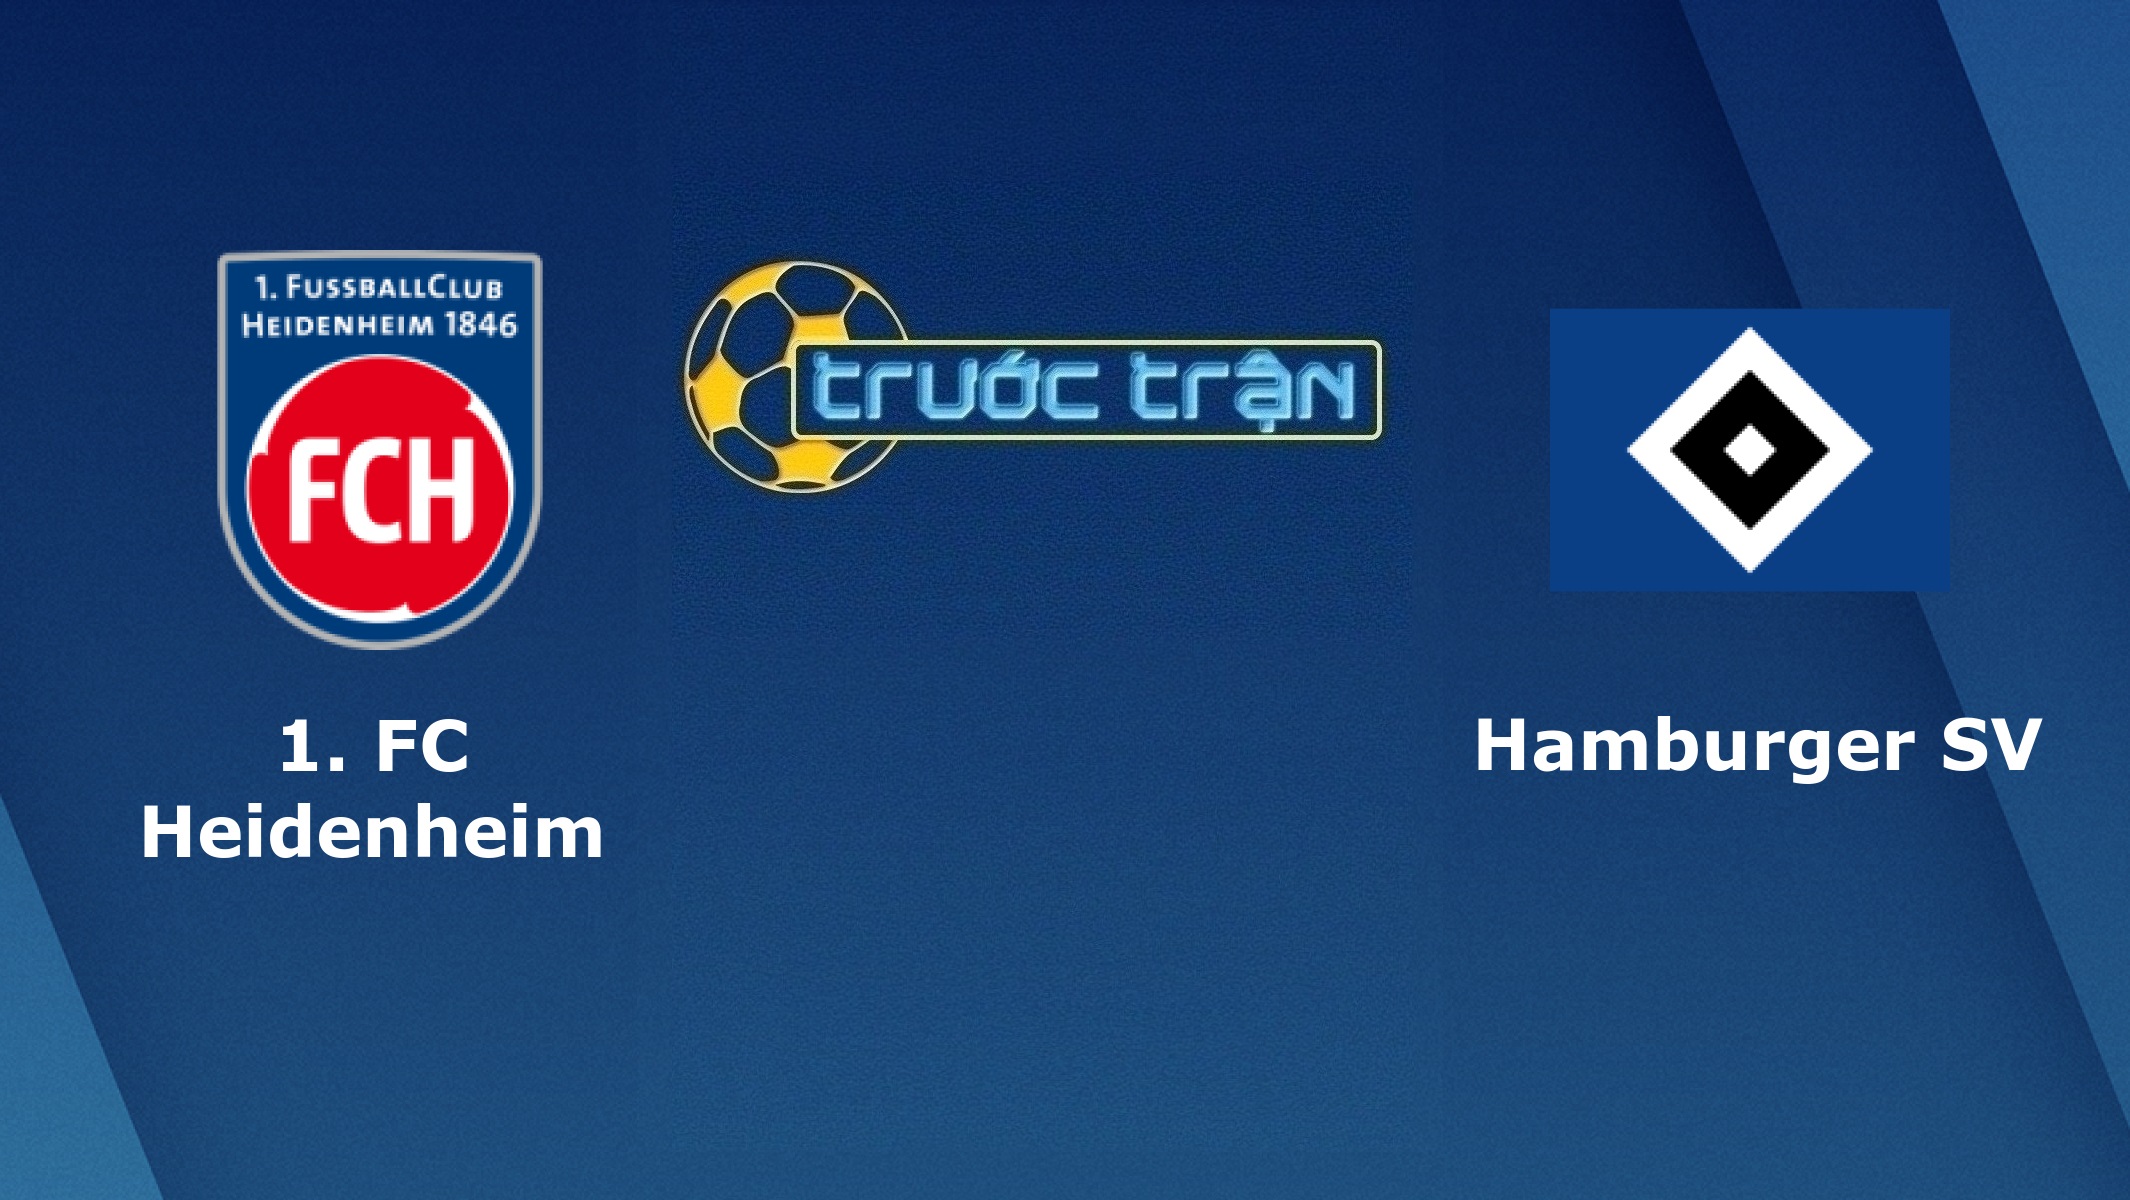 Heidenheim 1846 vs Hamburger – Tip kèo bóng đá hôm nay – 21/06